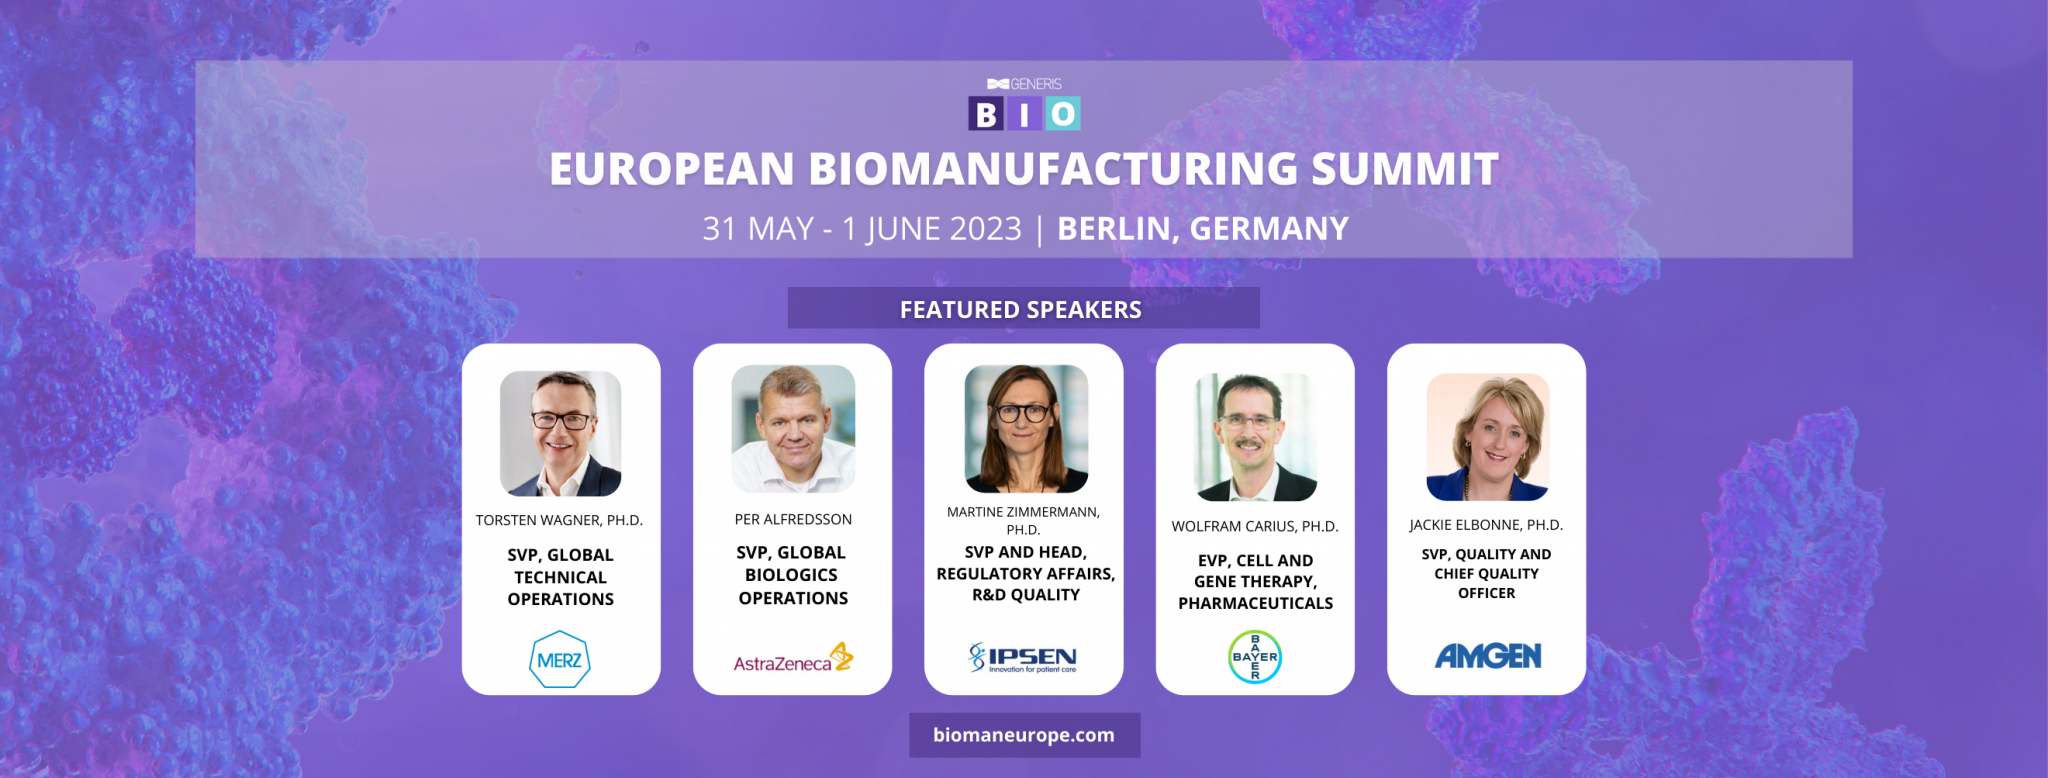 European Biomanufacturing Summit European Biotechnology Network